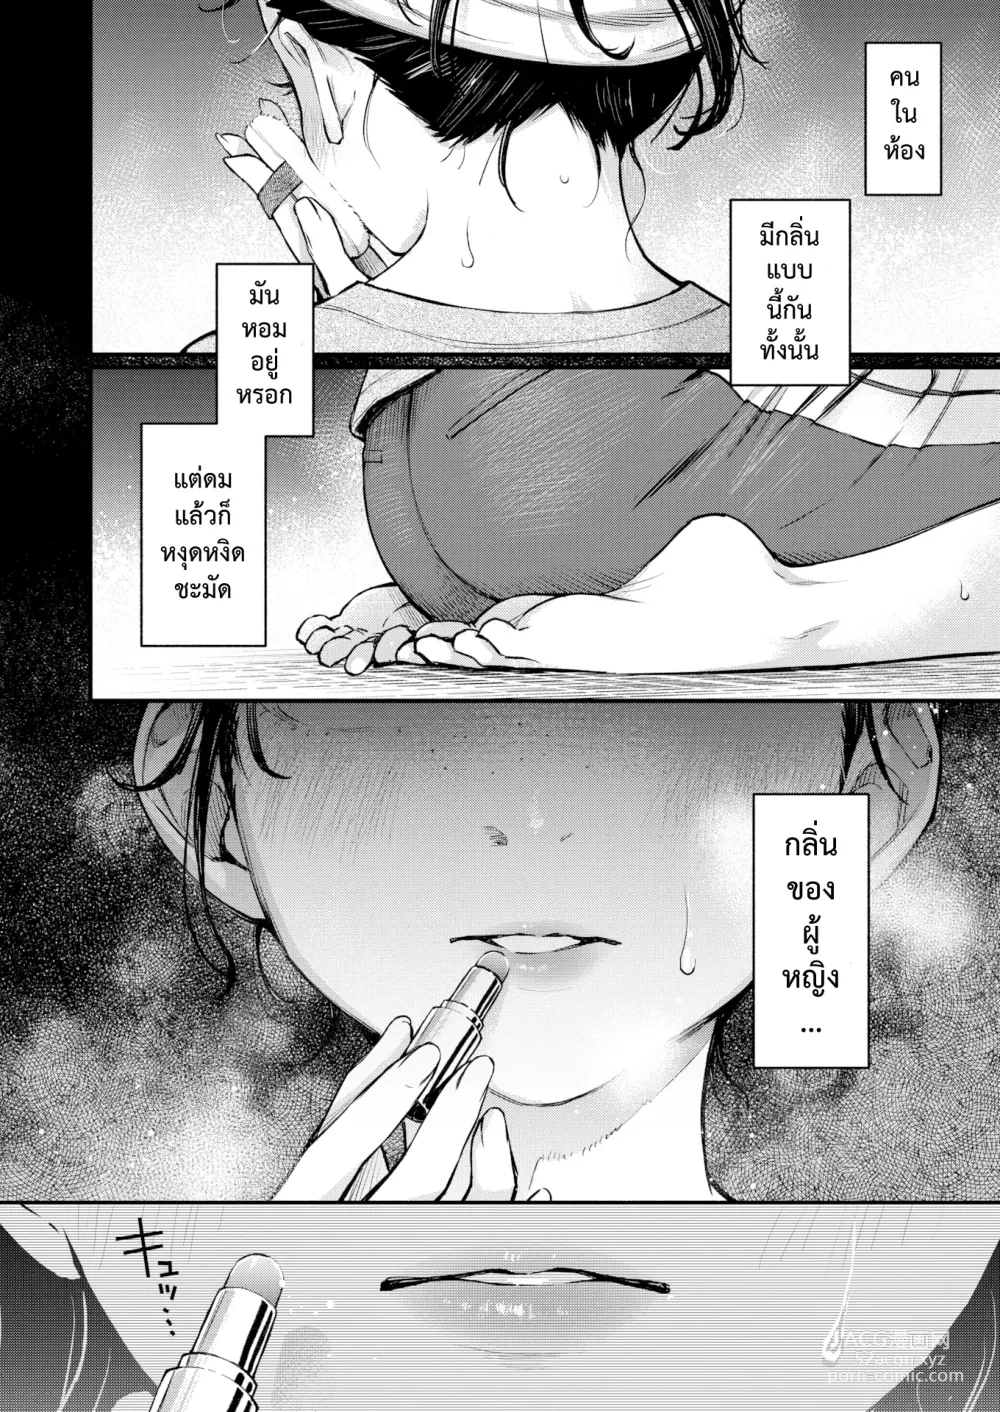 Page 7 of manga เพลงรักของคนหม่น #2 -บทอามาโนะ ยุยกะ-